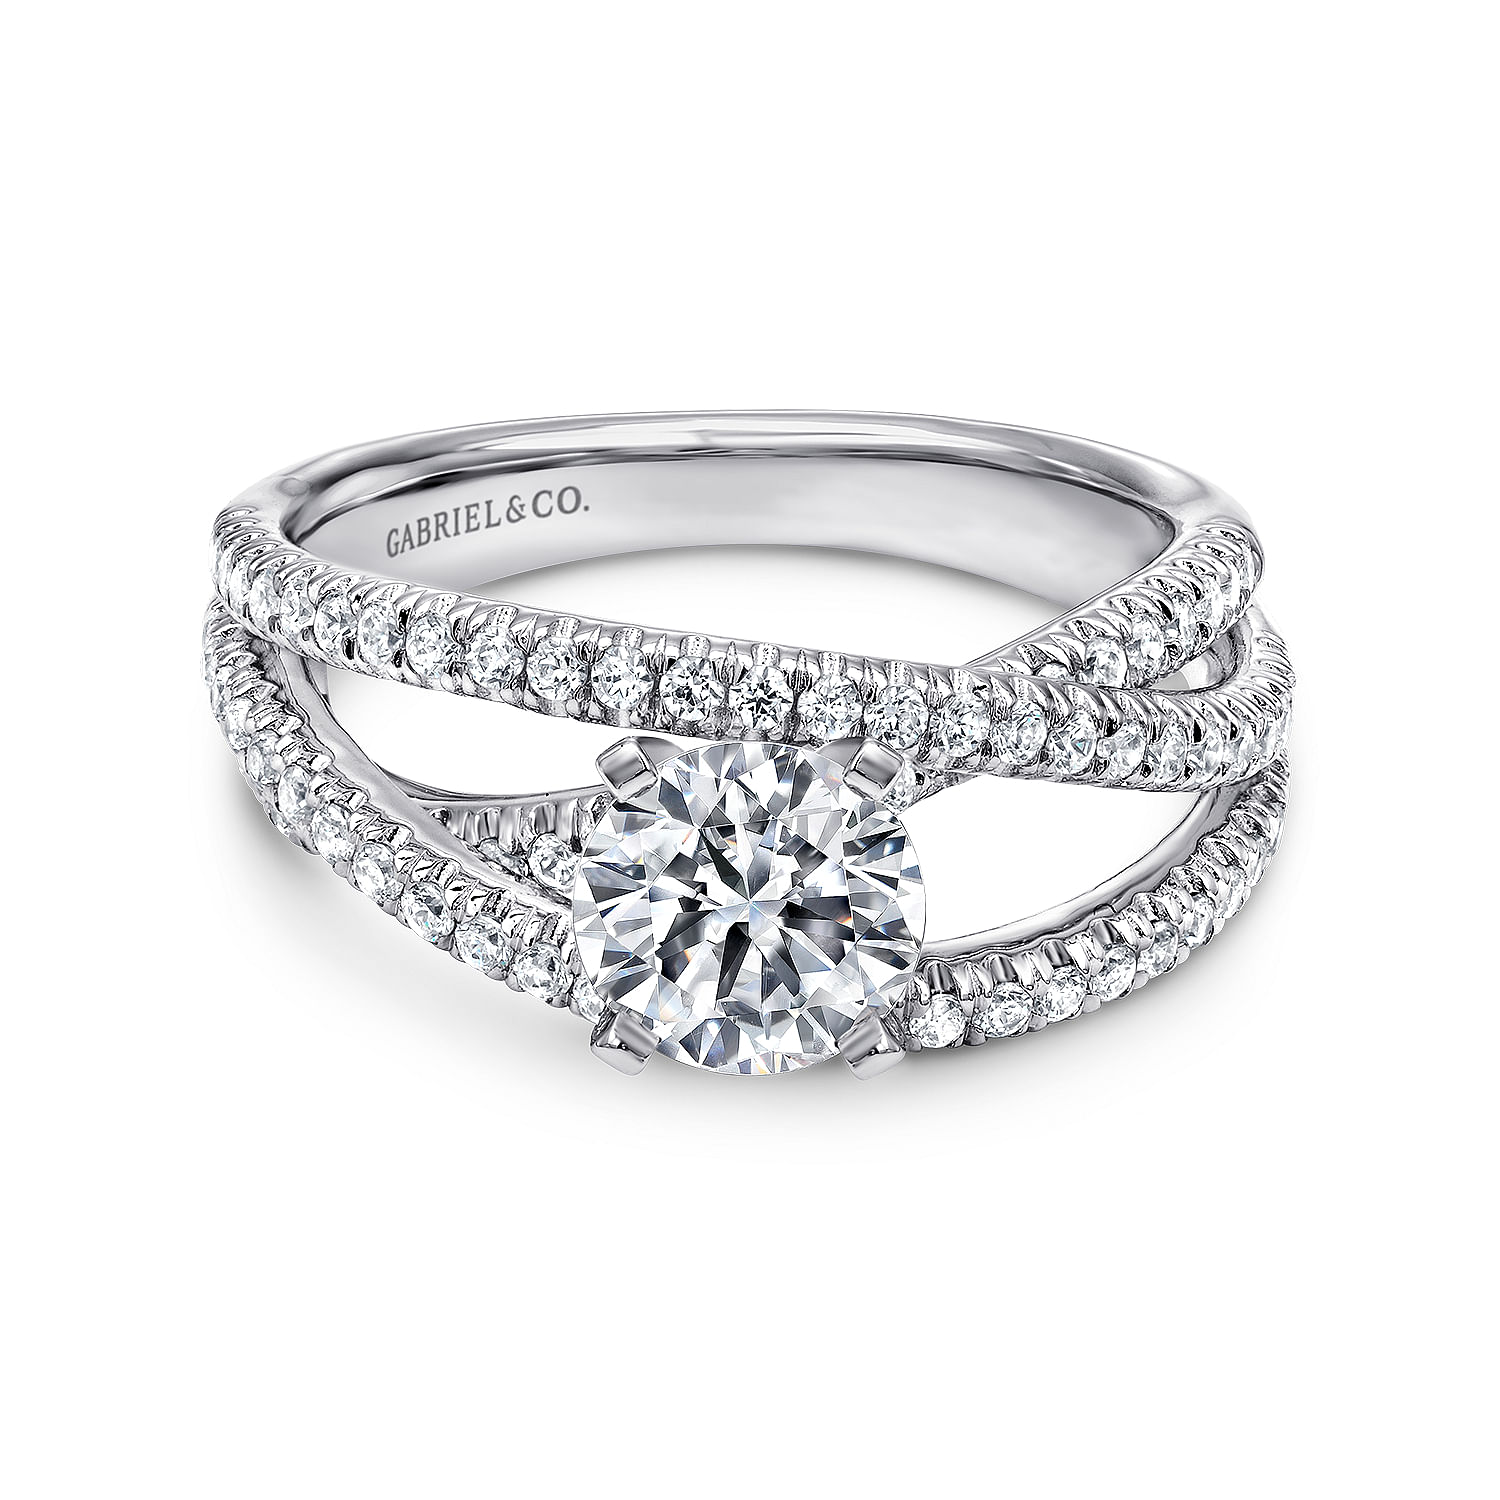 Mackenzie---14K-White-Gold-Round-Free-Form-Diamond-Engagement-Ring1